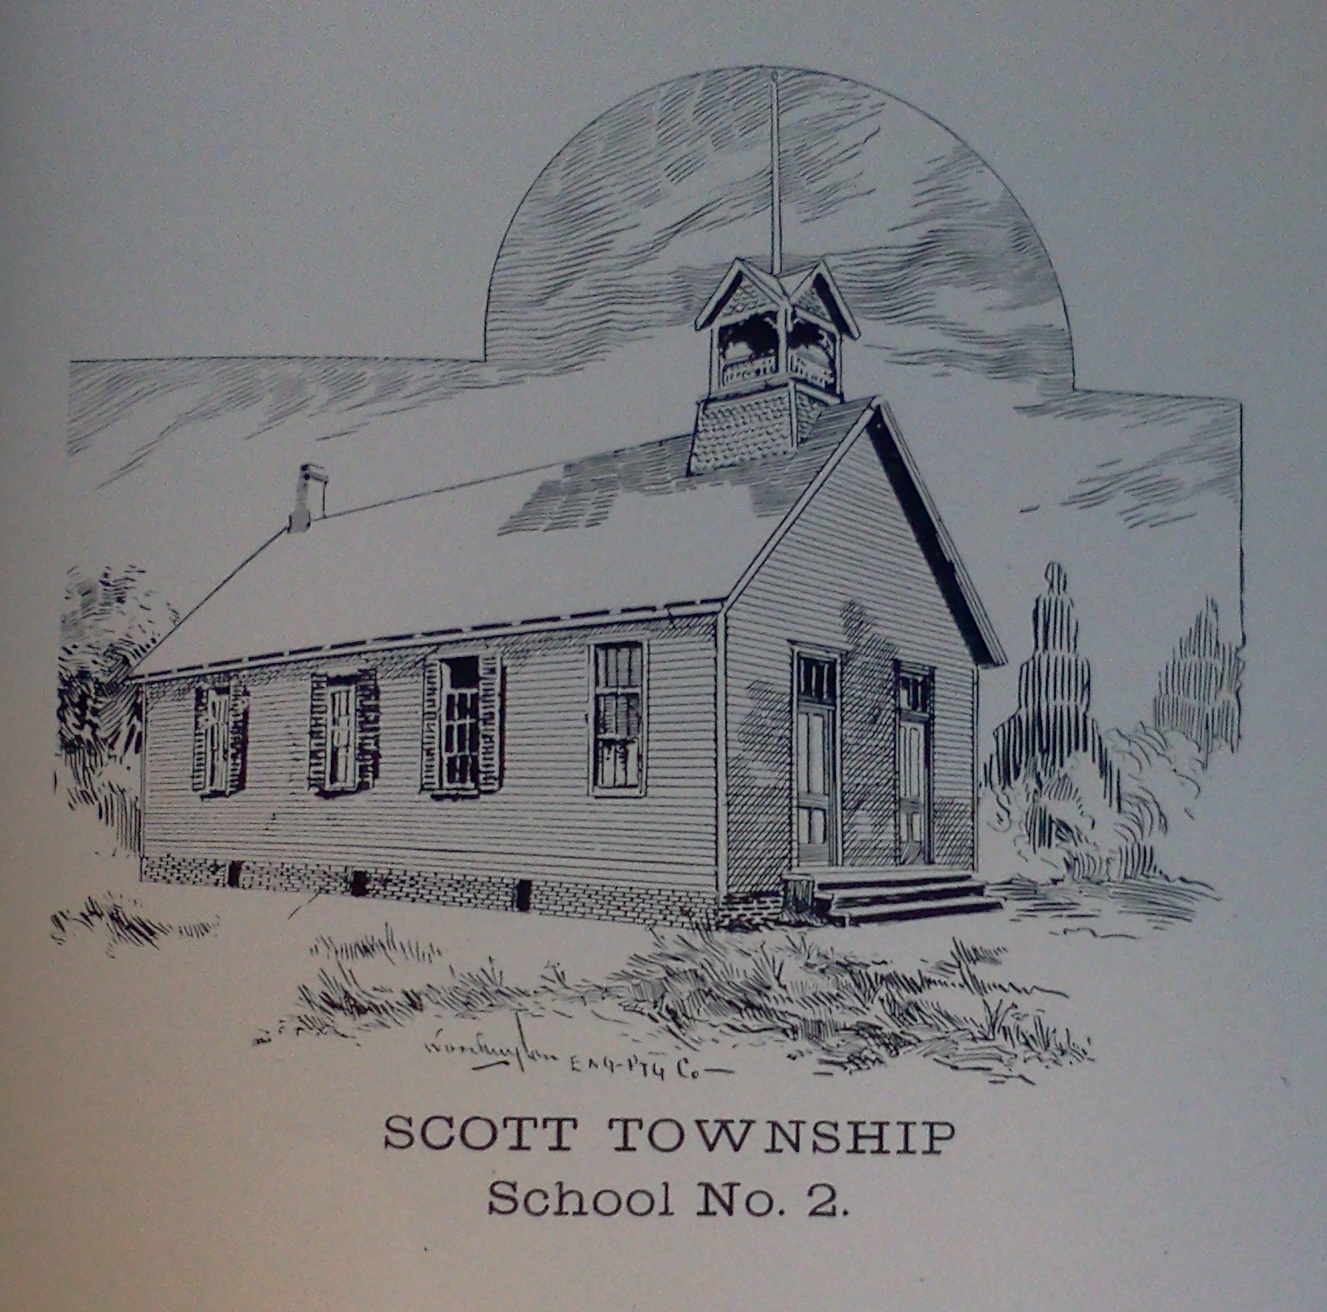 Scott Township School No. 2